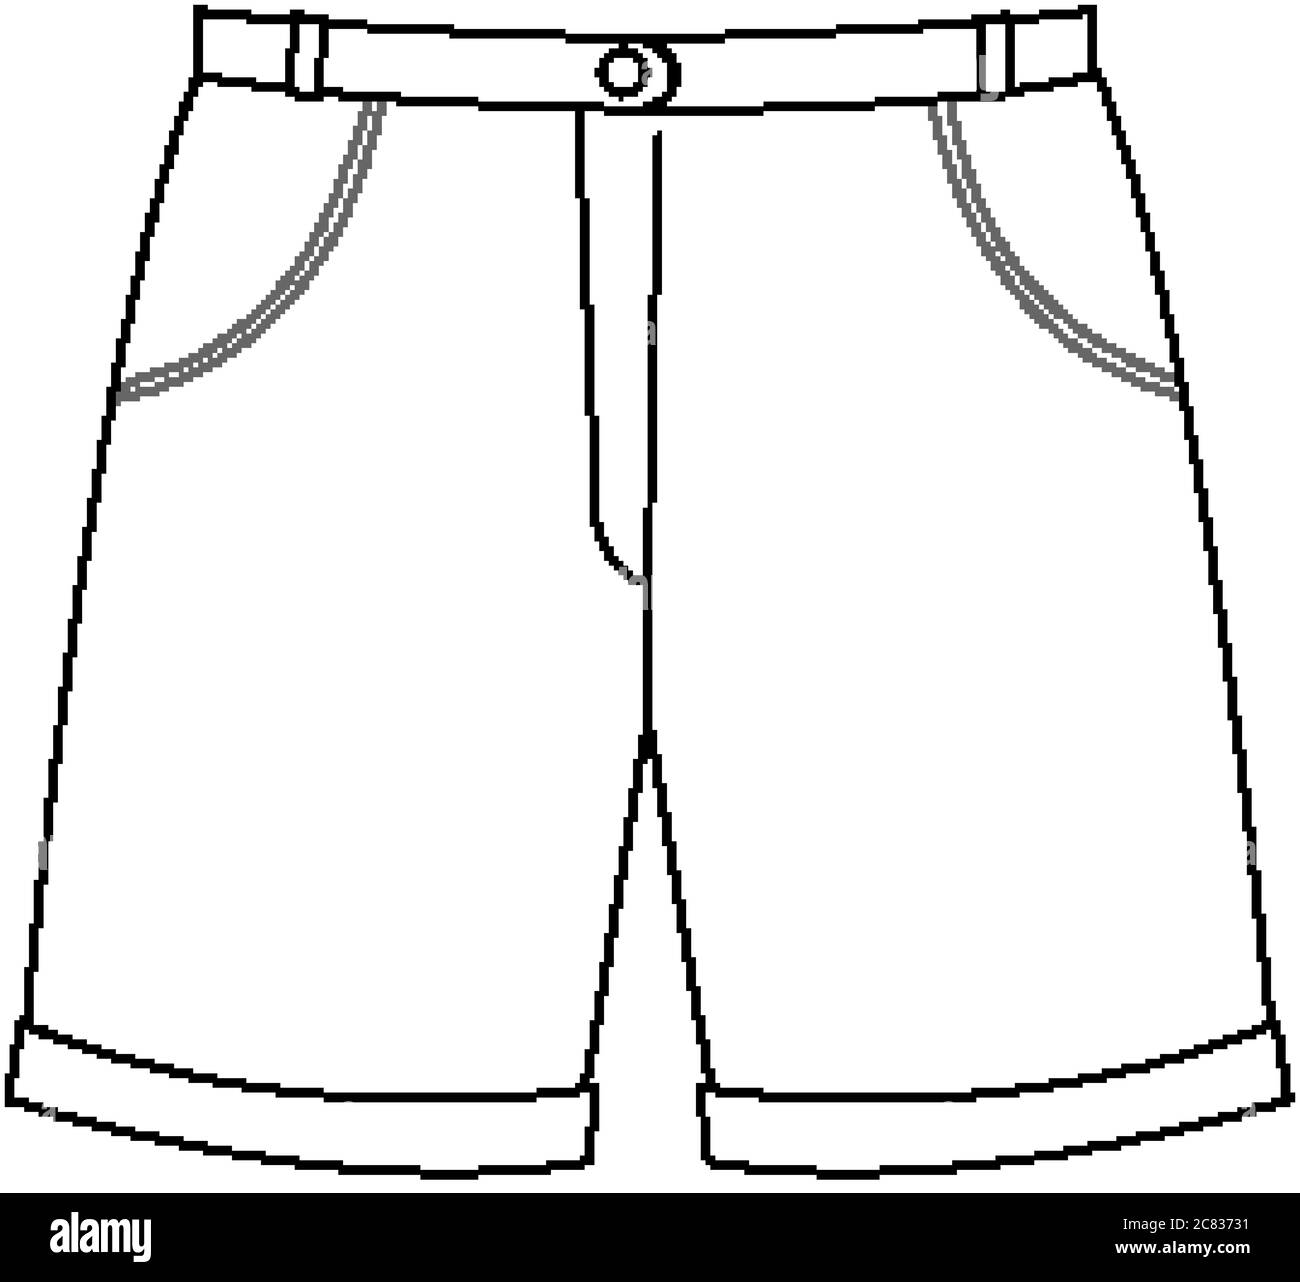 Isolated trouser on white background illustration Stock Vector Image ...